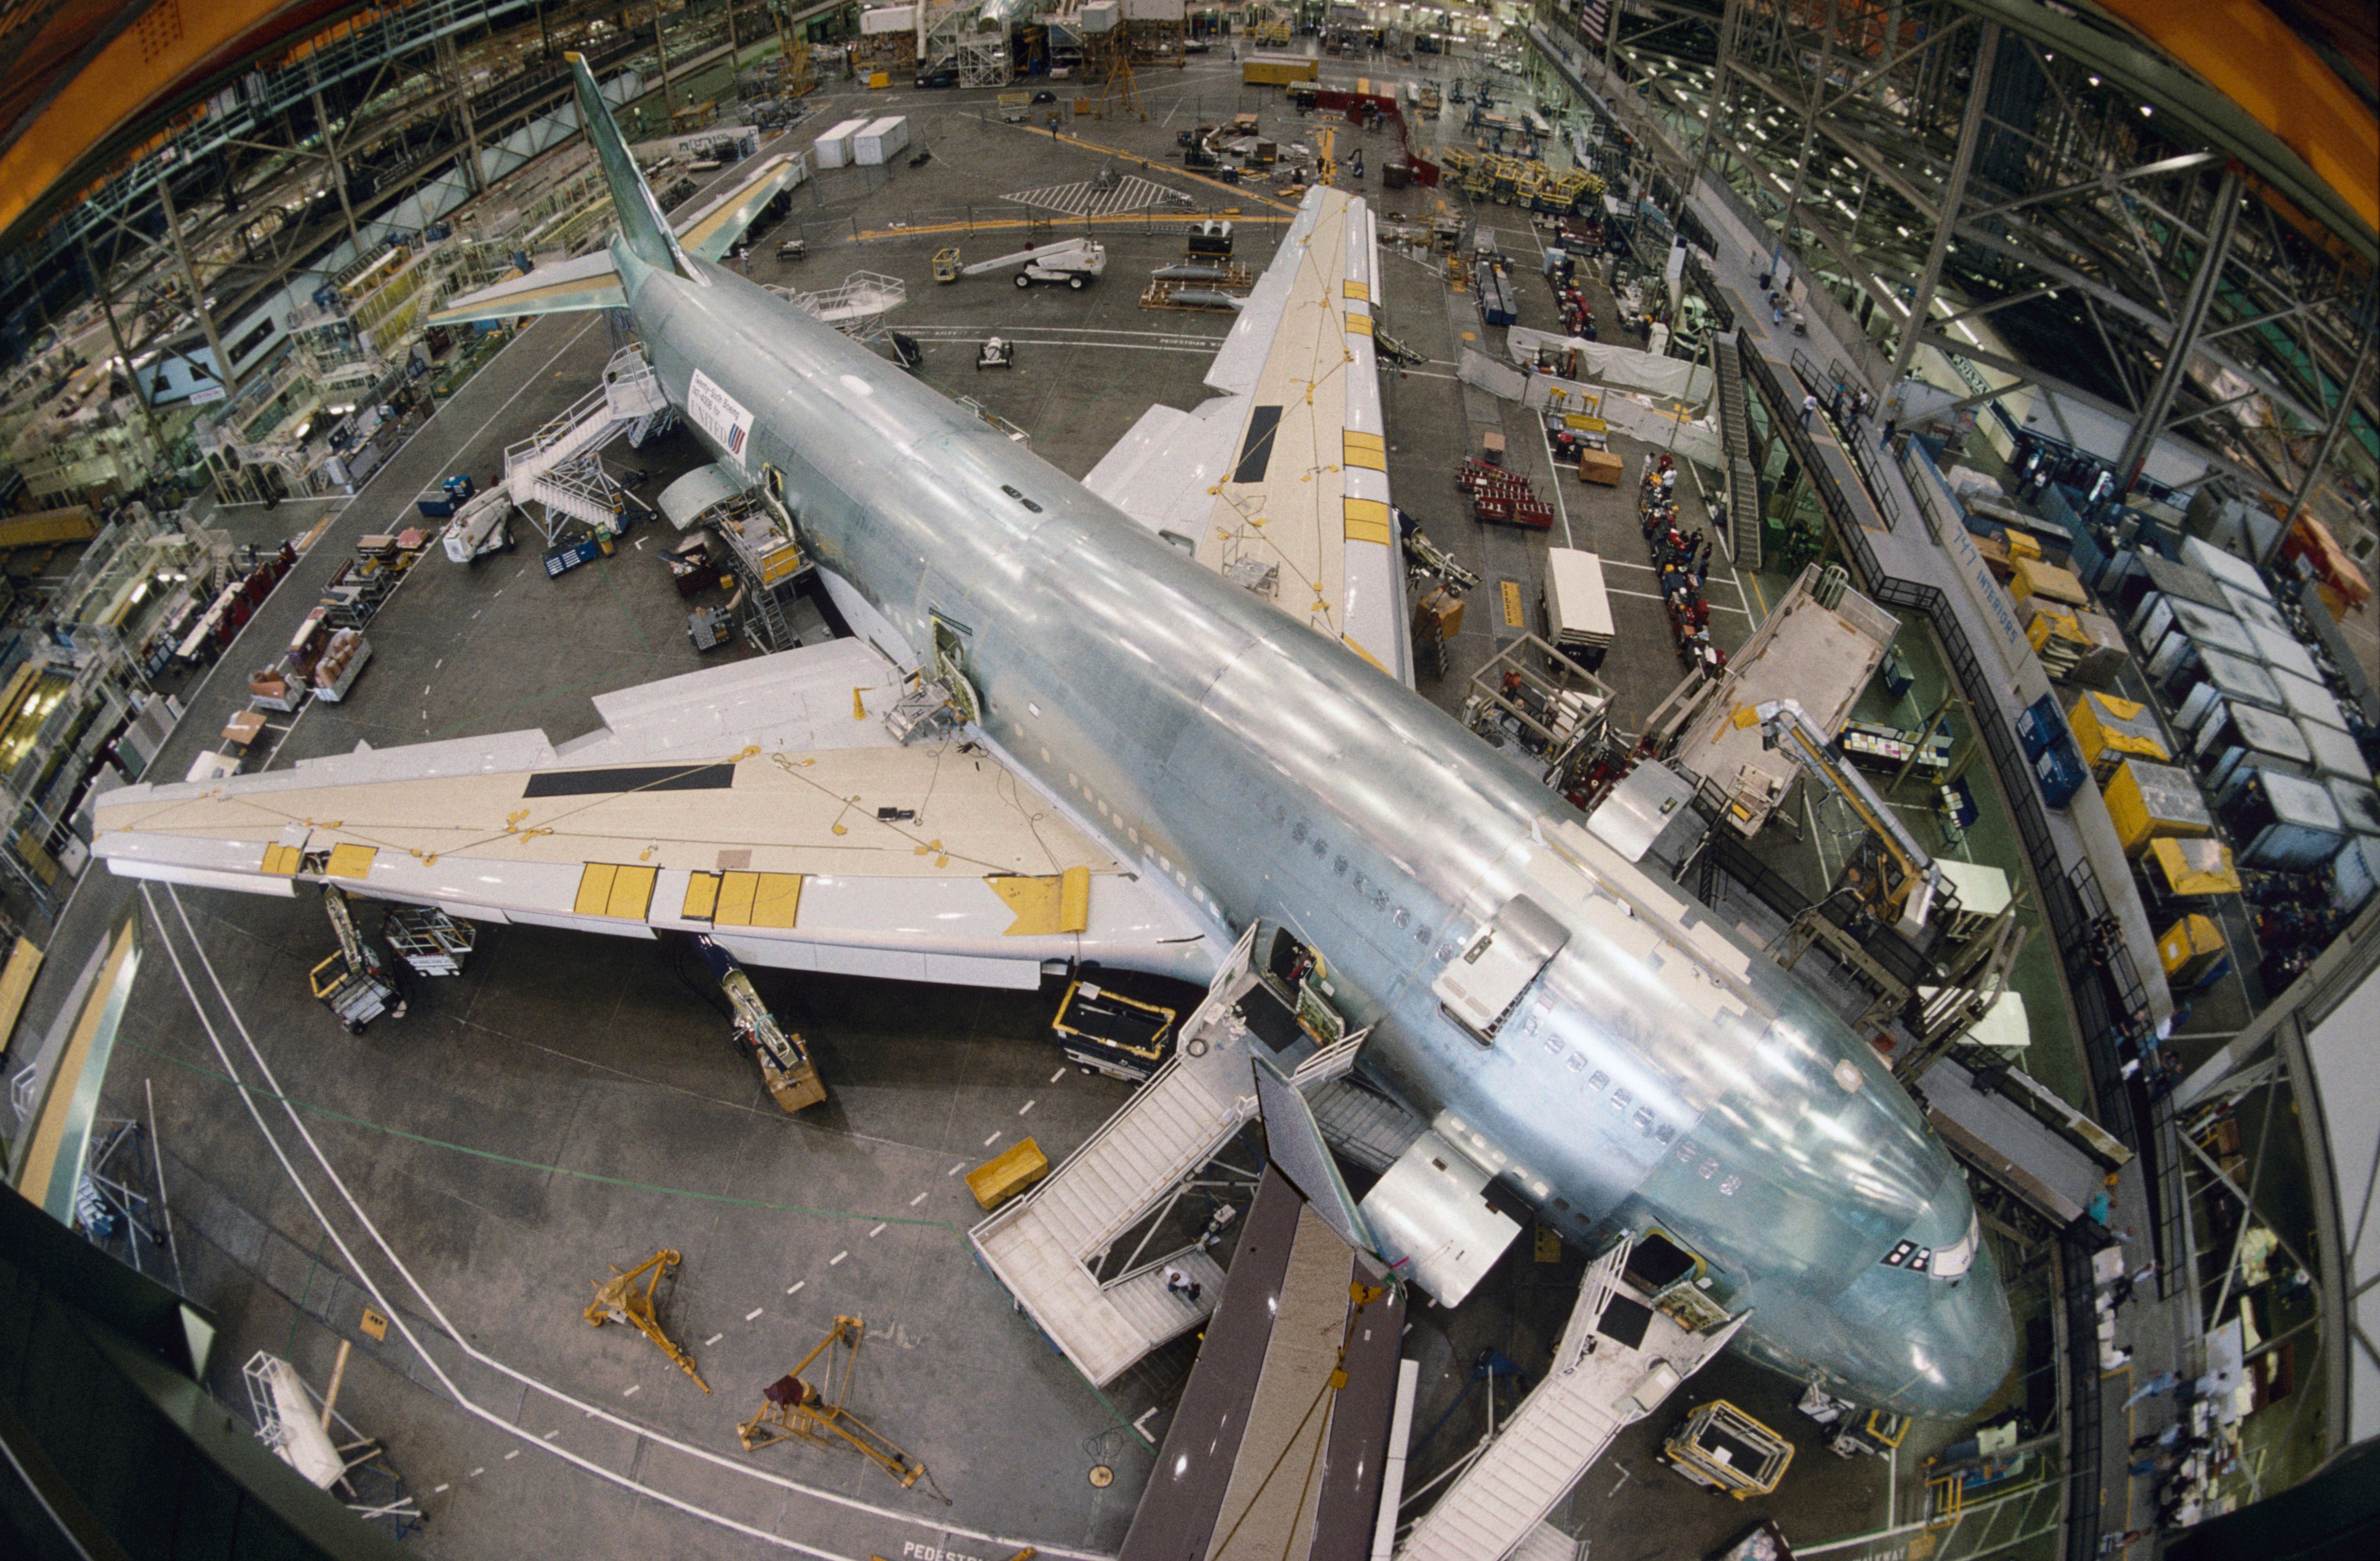 747 being built in hangar 